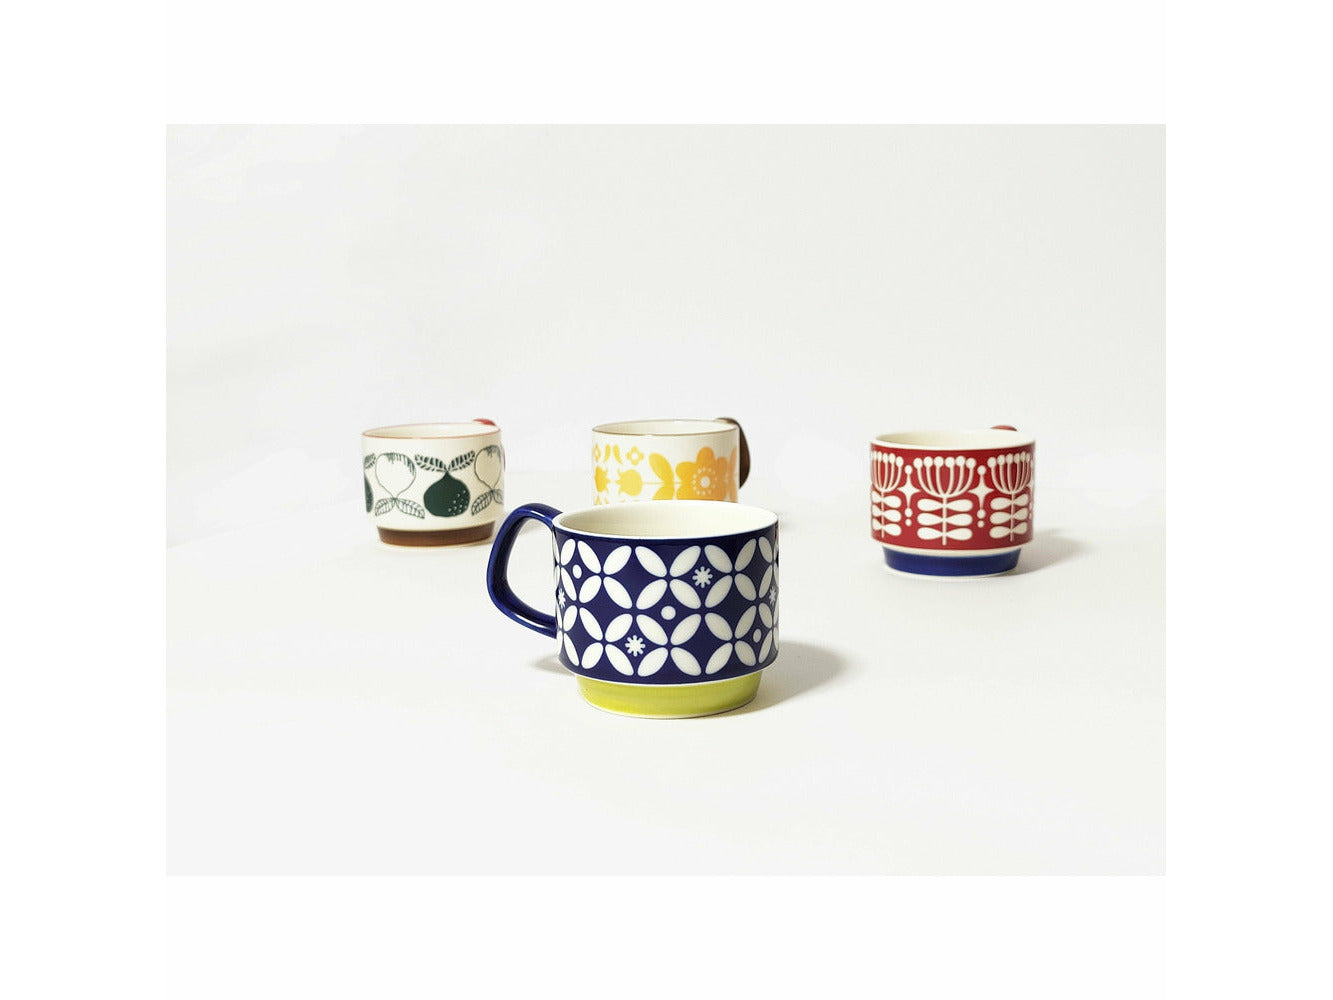 coffee mug, mugs, coffee cups, spainish coffee mugs, Mediterranean style mugs, alborada, gift for coffee lover, Housewarming gift, new home must, happy stuff